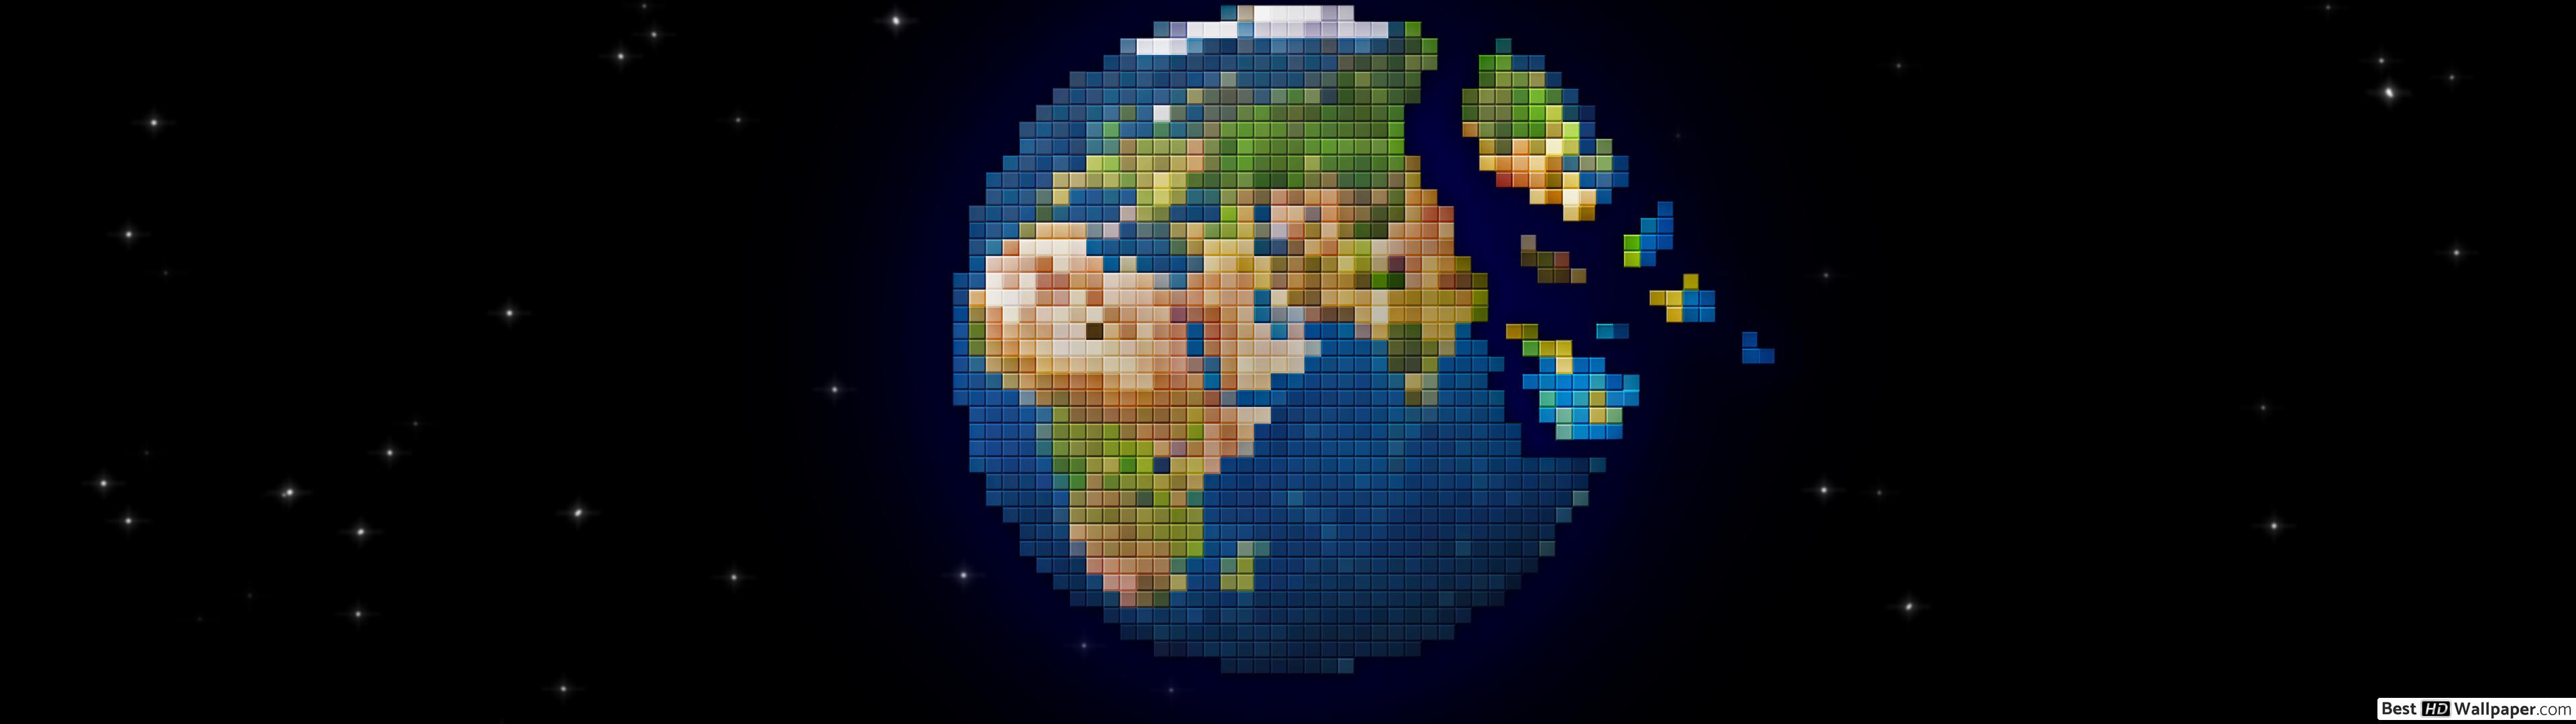 pixel wallpaper,world,earth,planet,globe,space